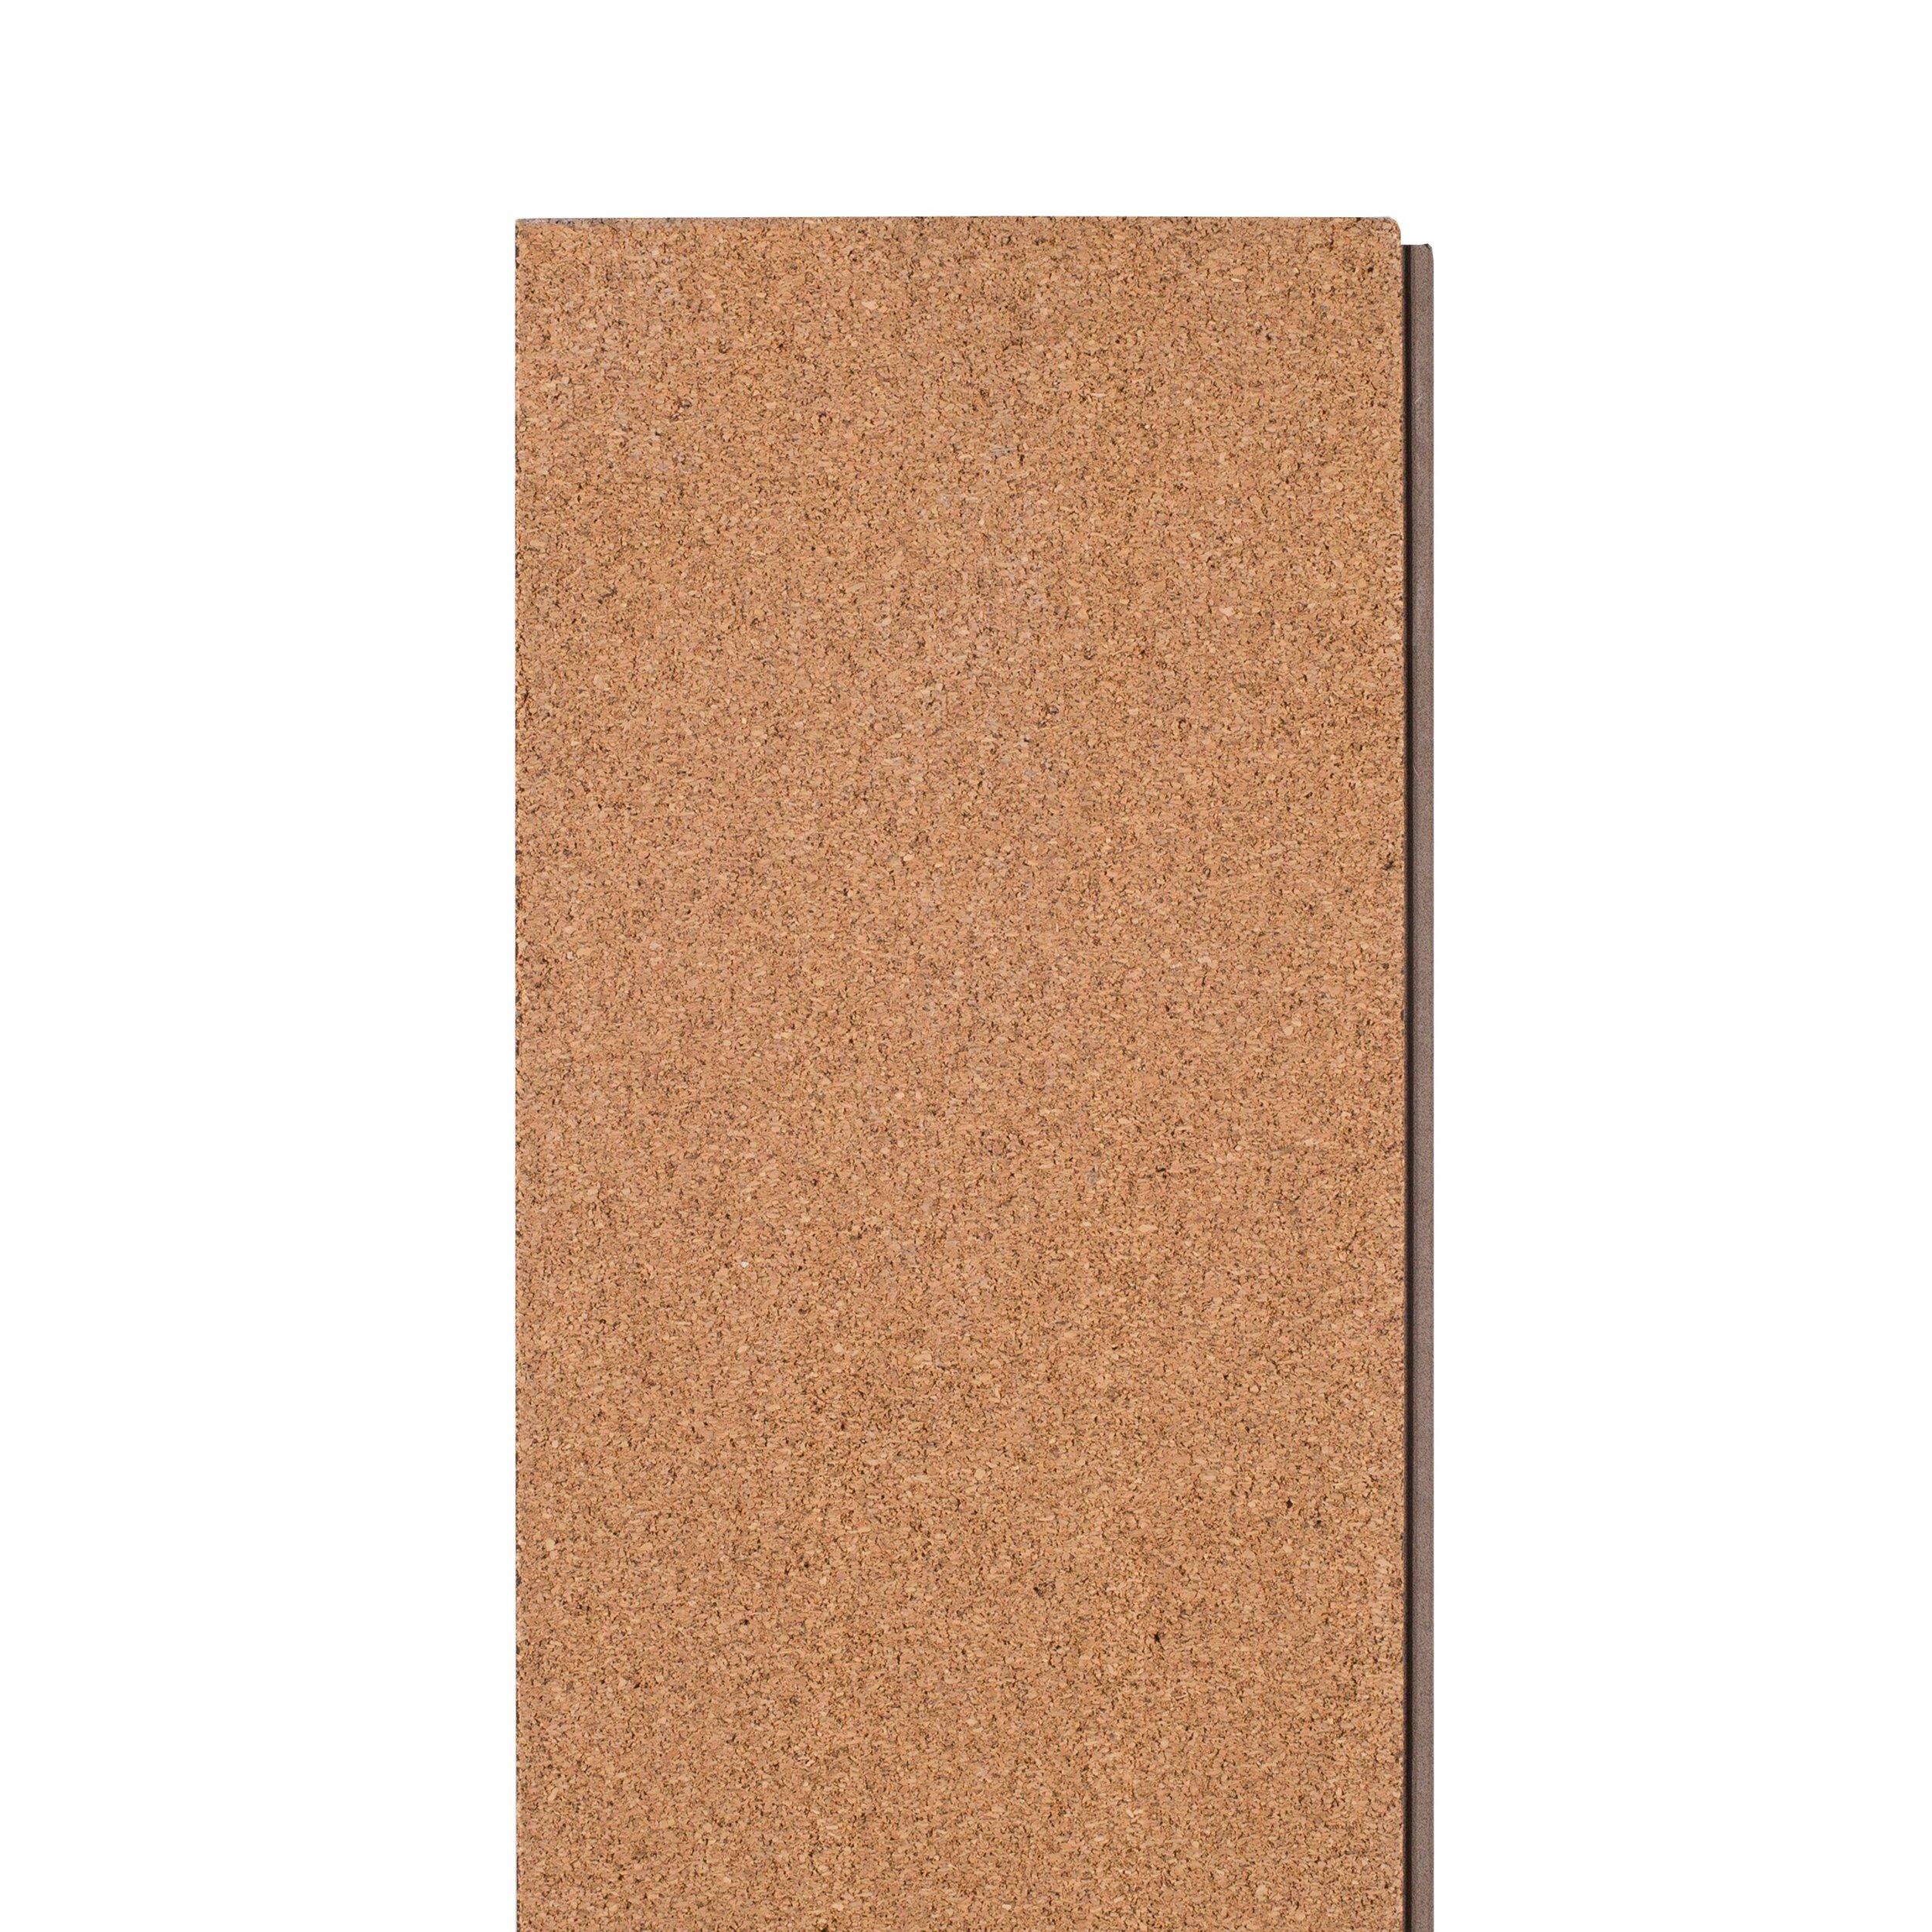 Saddlebrook Rigid Core Luxury Vinyl Plank - Cork Back